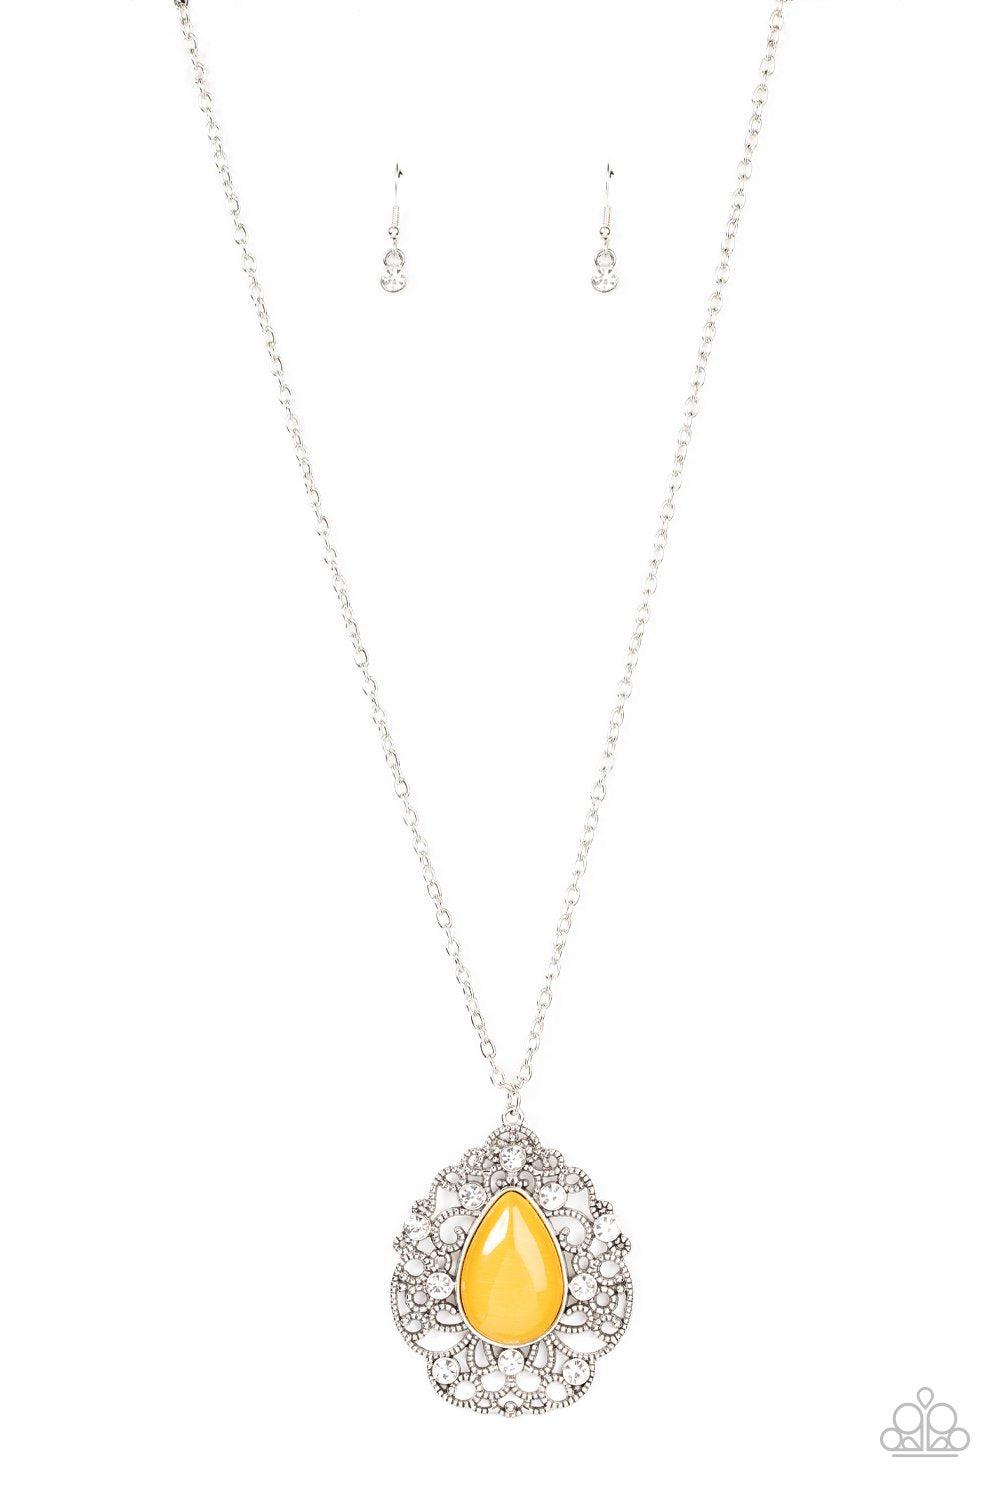 Chrysanthemum Craze - yellow - Paparazzi necklace – JewelryBlingThing